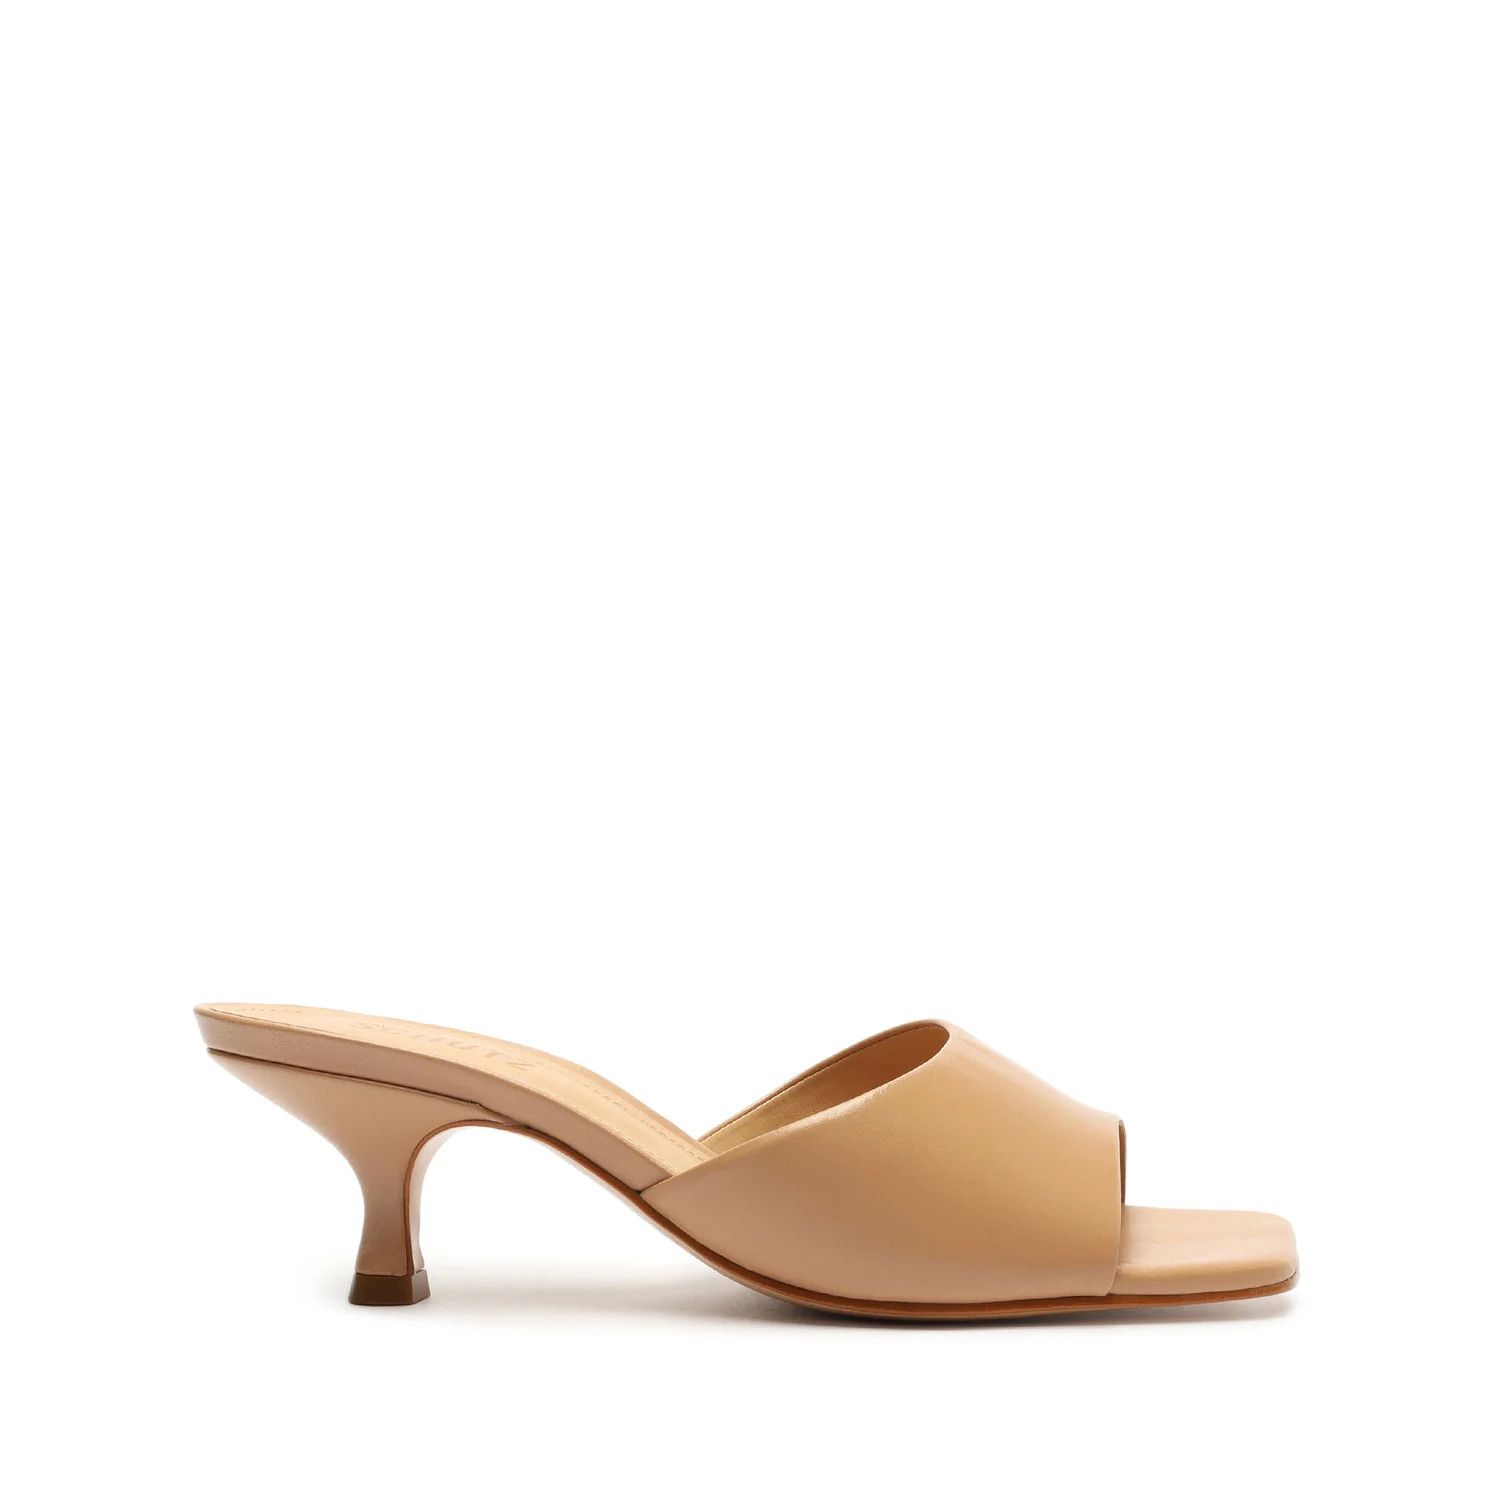 Dethalia Leather Sandal in Honey Beige Color | Schutz | Schutz Shoes (US)